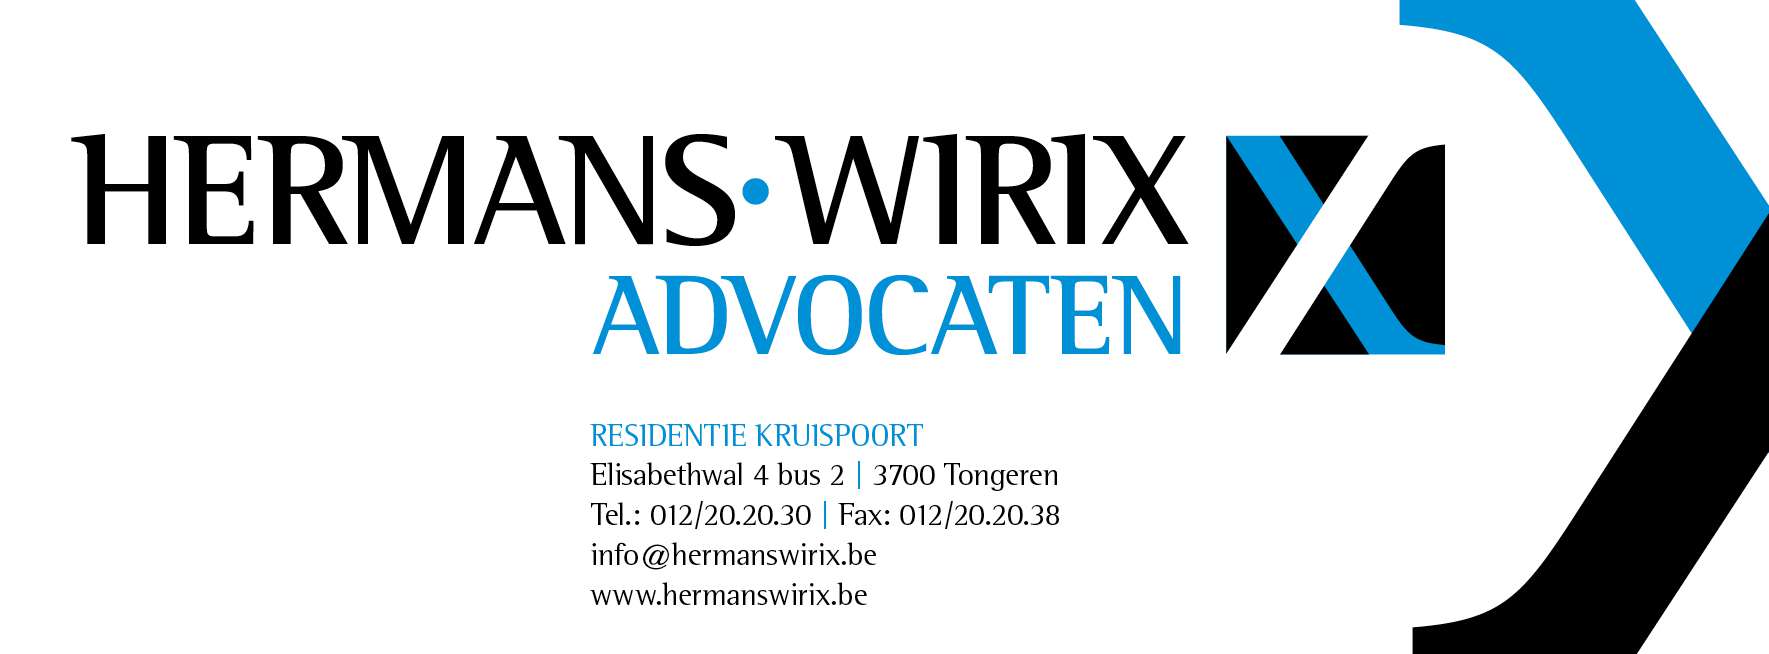 advocaten Beverst Hermans-Wirix advocaten